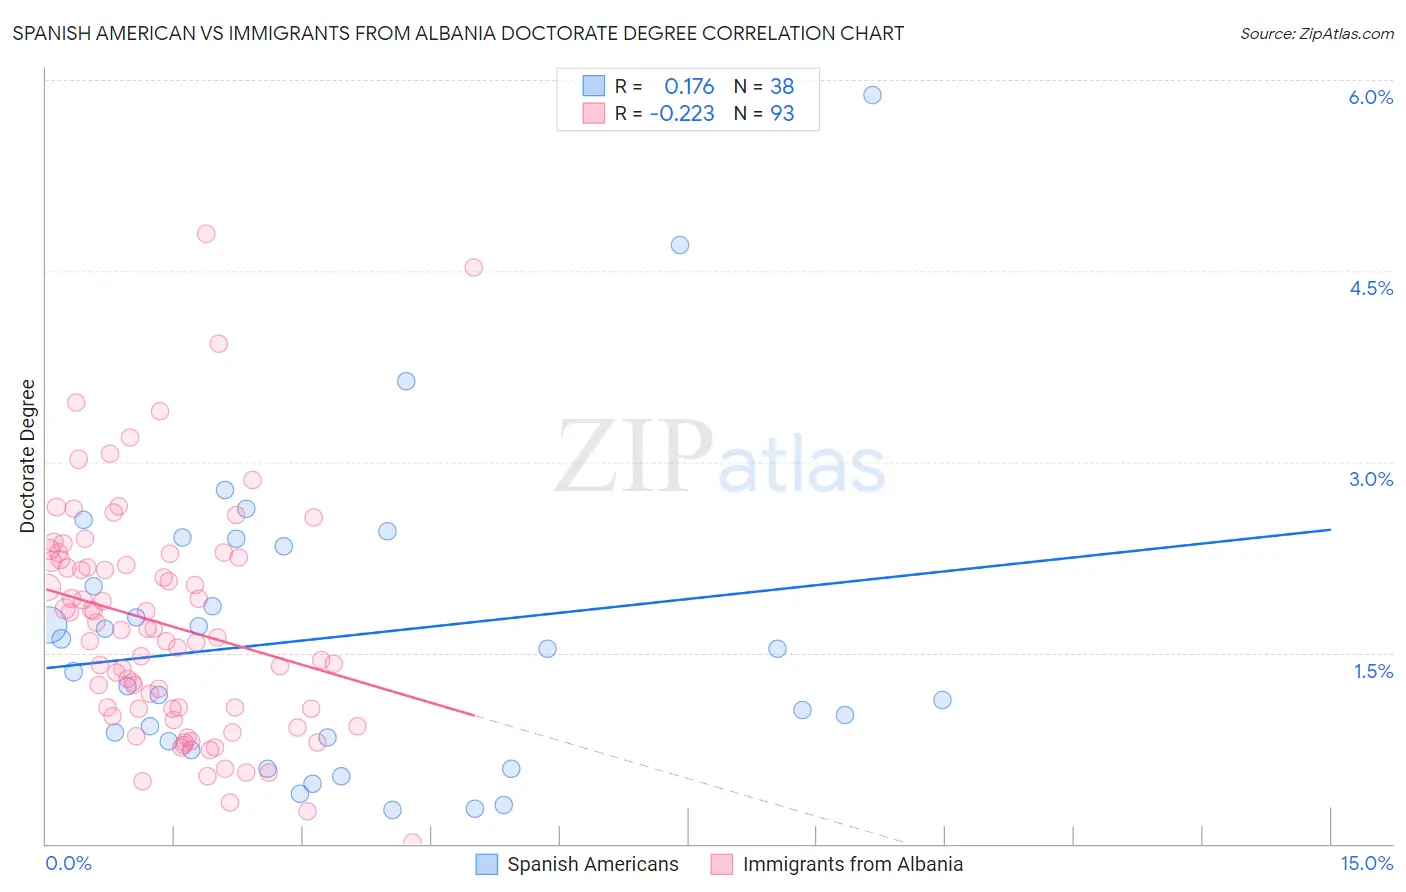 Spanish American vs Immigrants from Albania Doctorate Degree